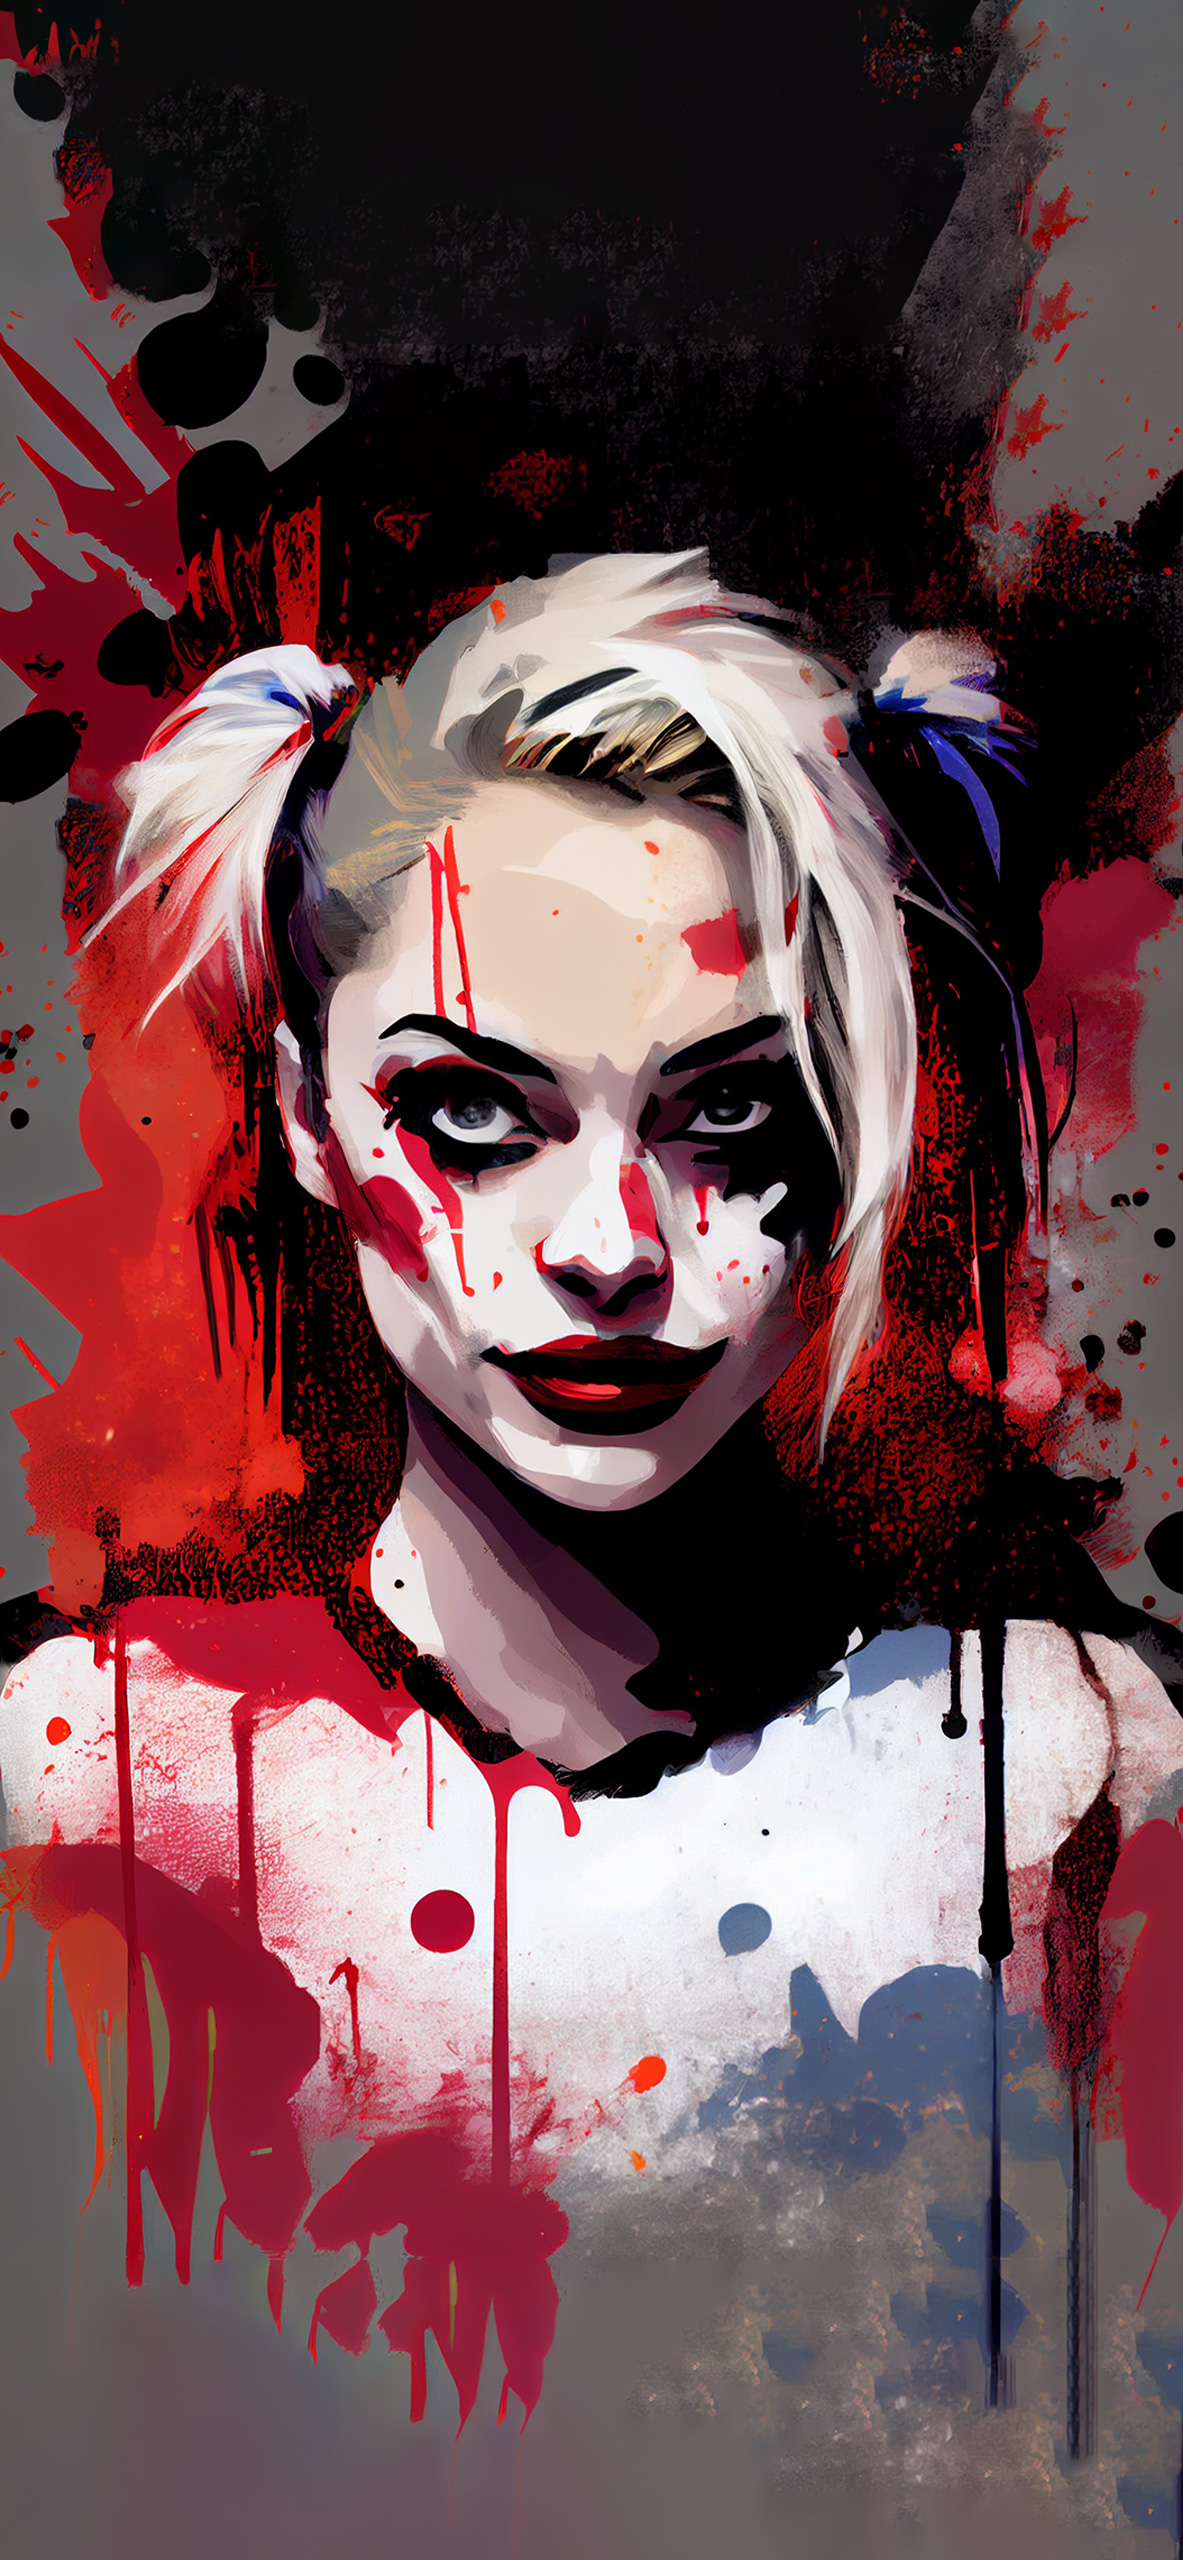 DC Harley Quinn Art Wallpapers - Harley Quinn Wallpapers iPhone